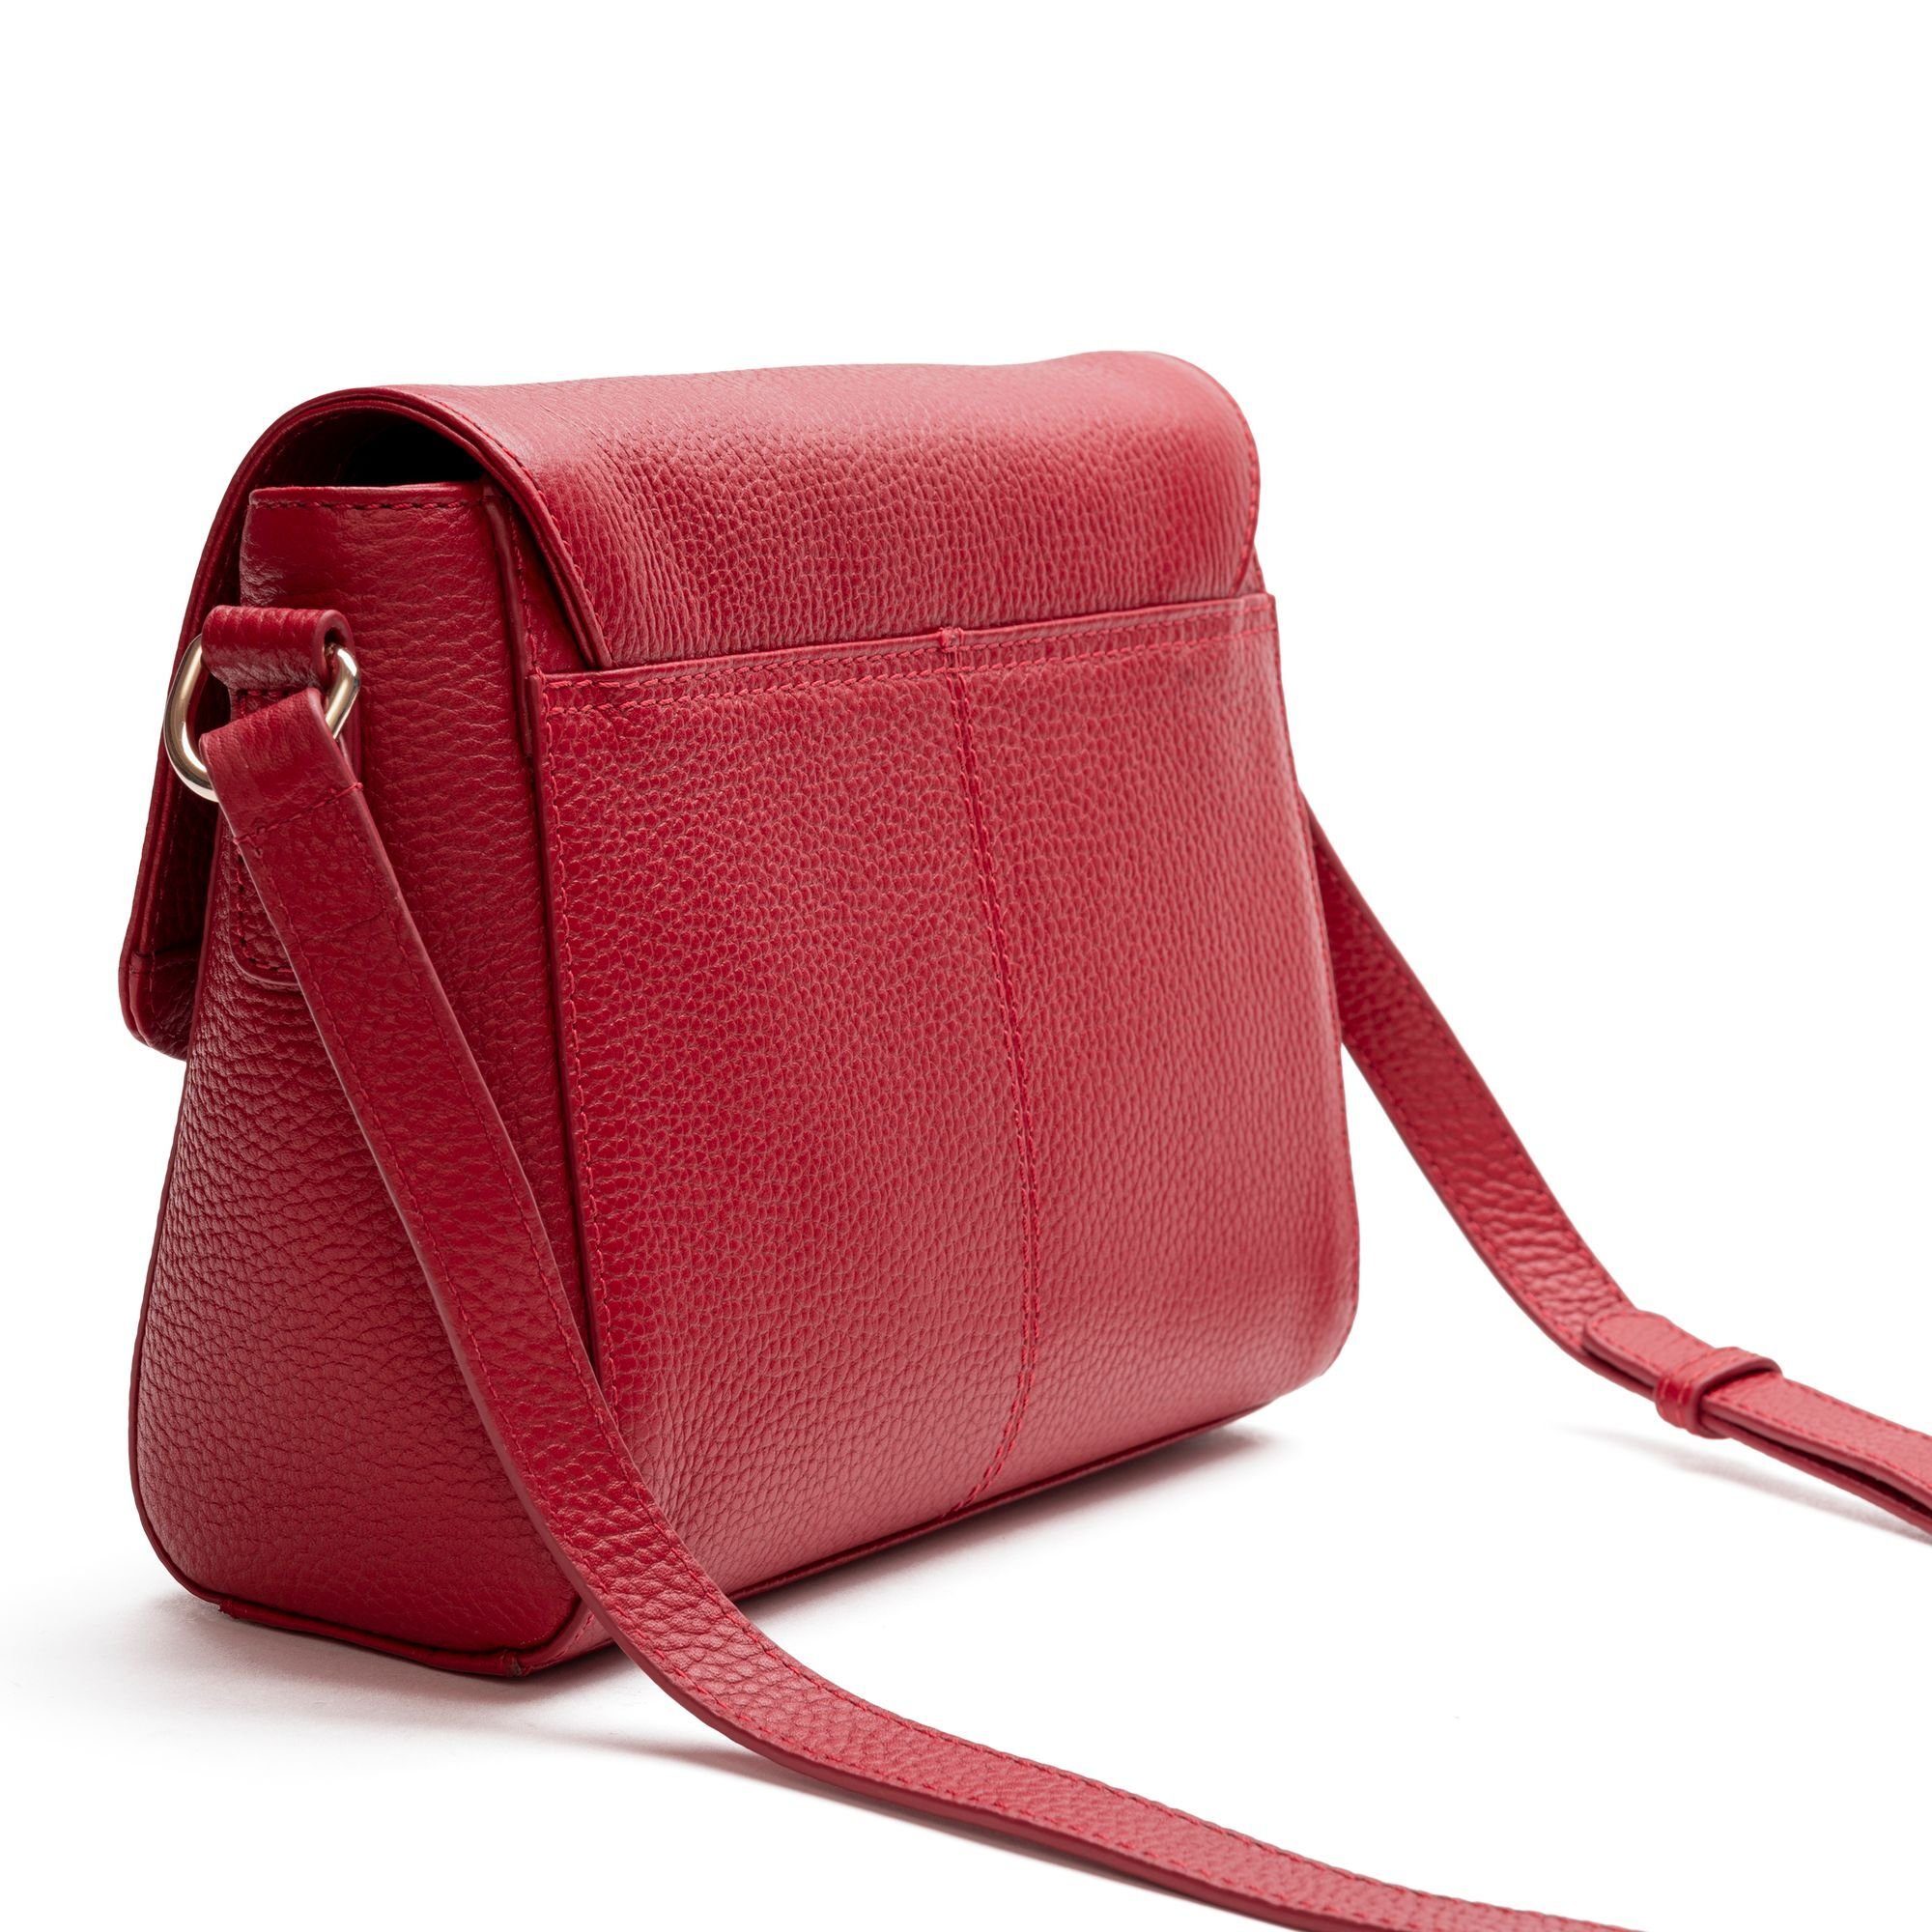 Bologna Leather, Umhängetasche Lazarotti red Leder